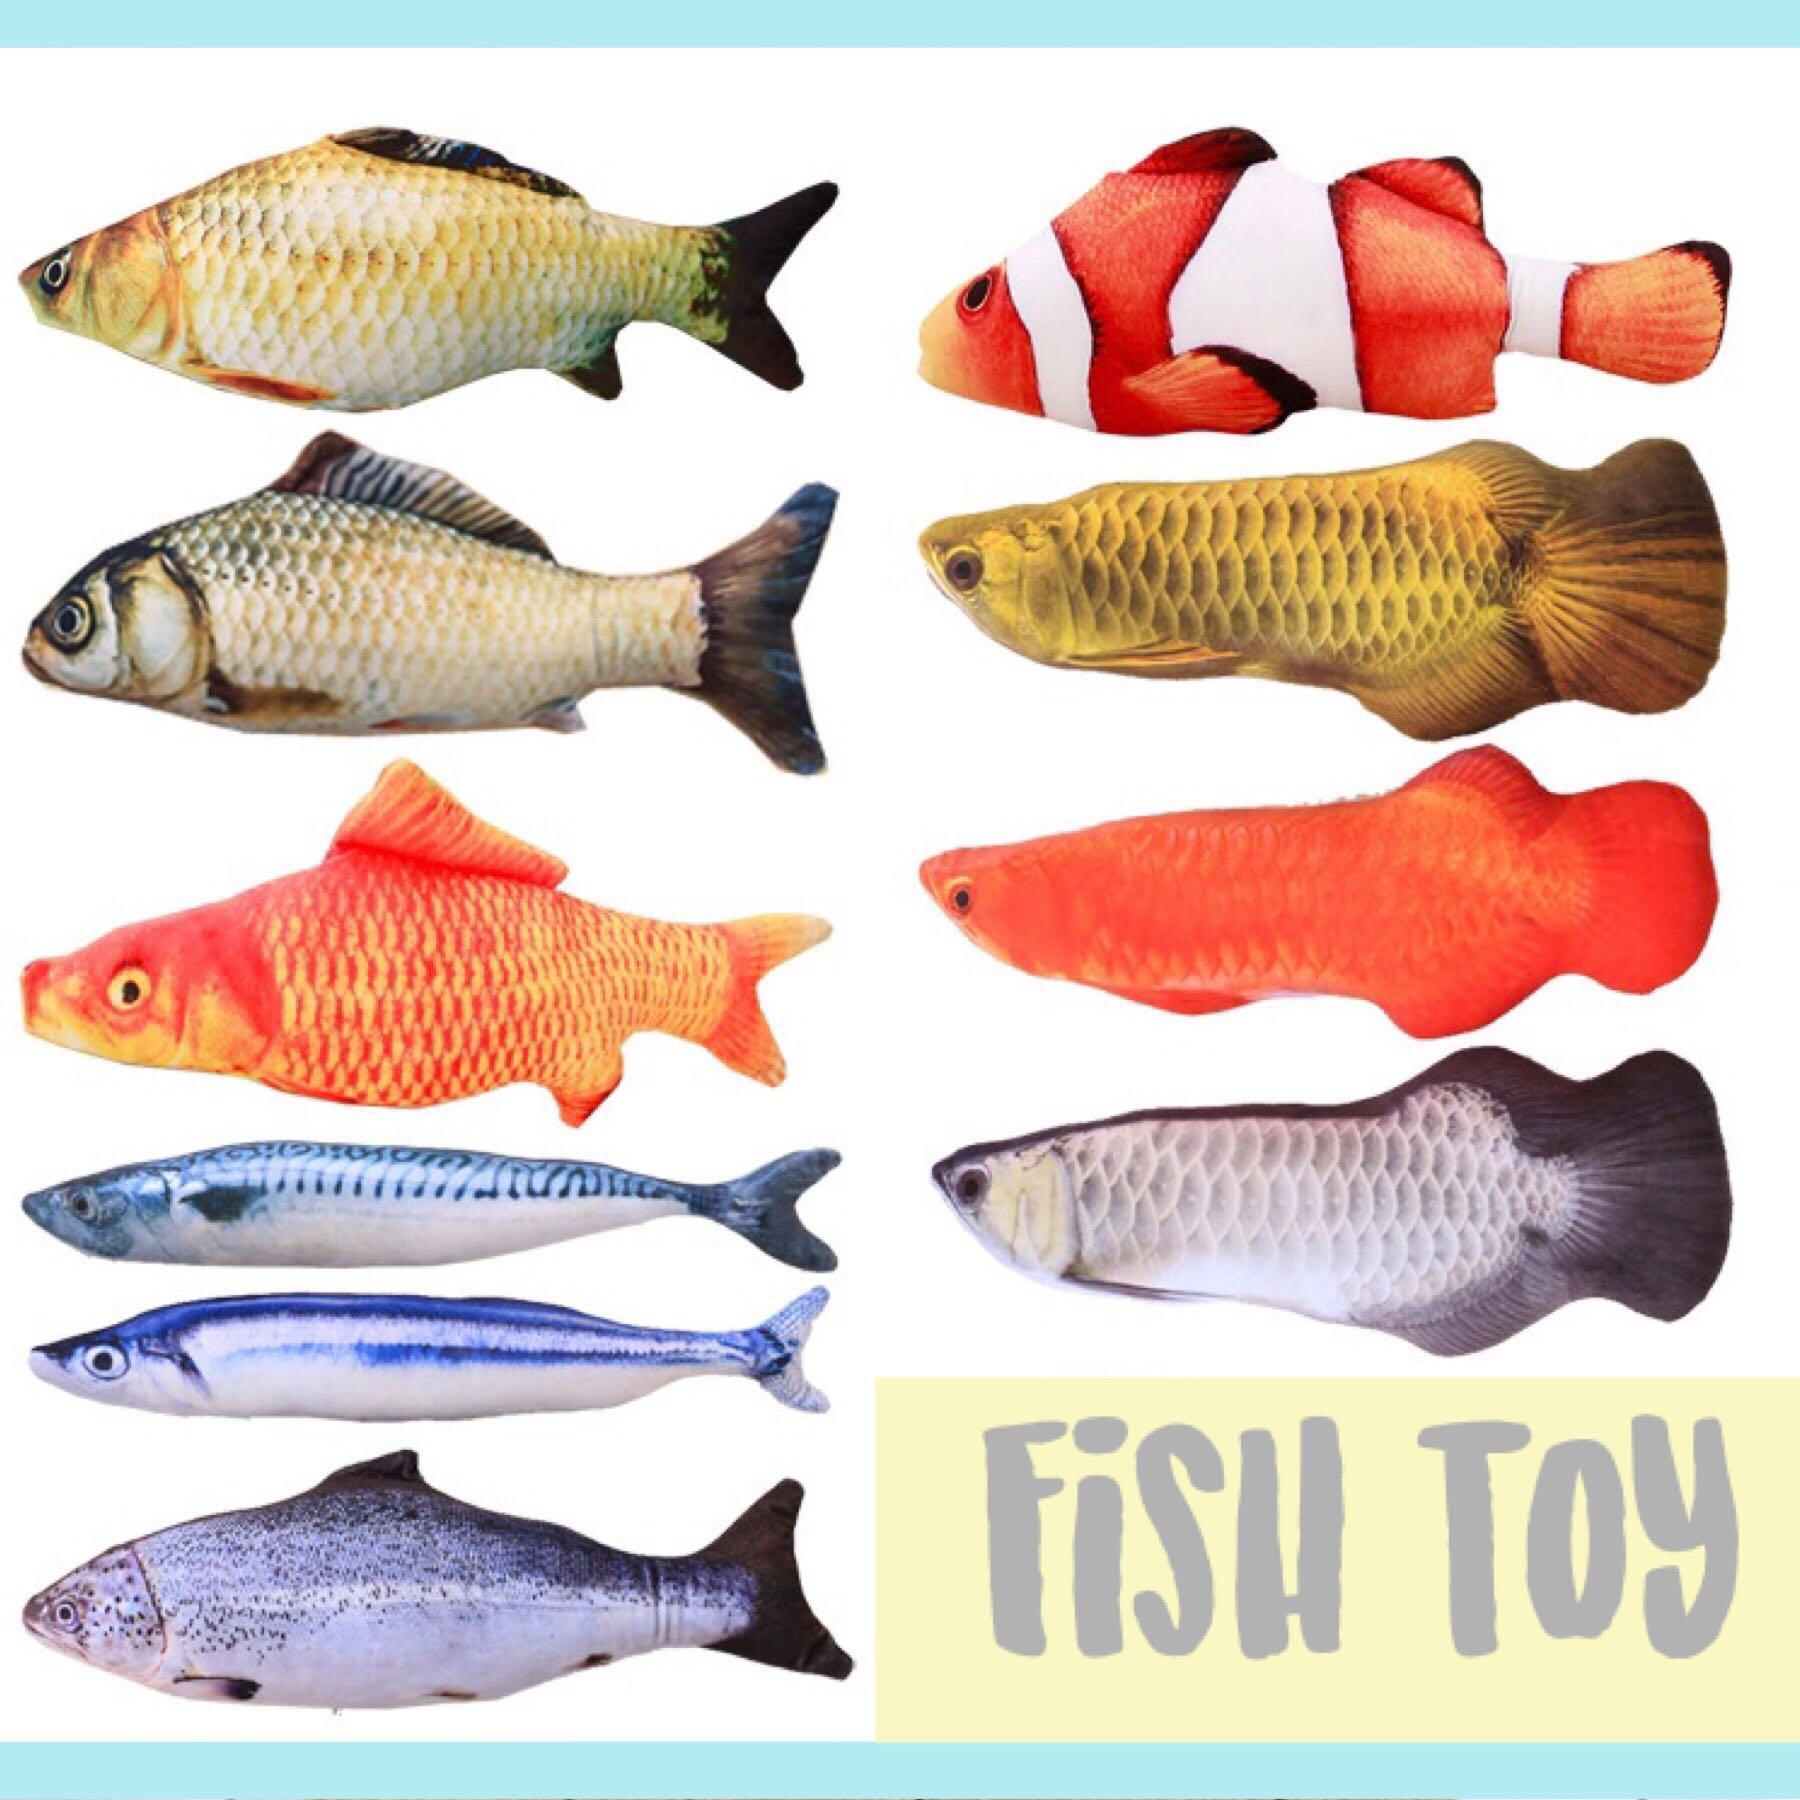 fish soft toy